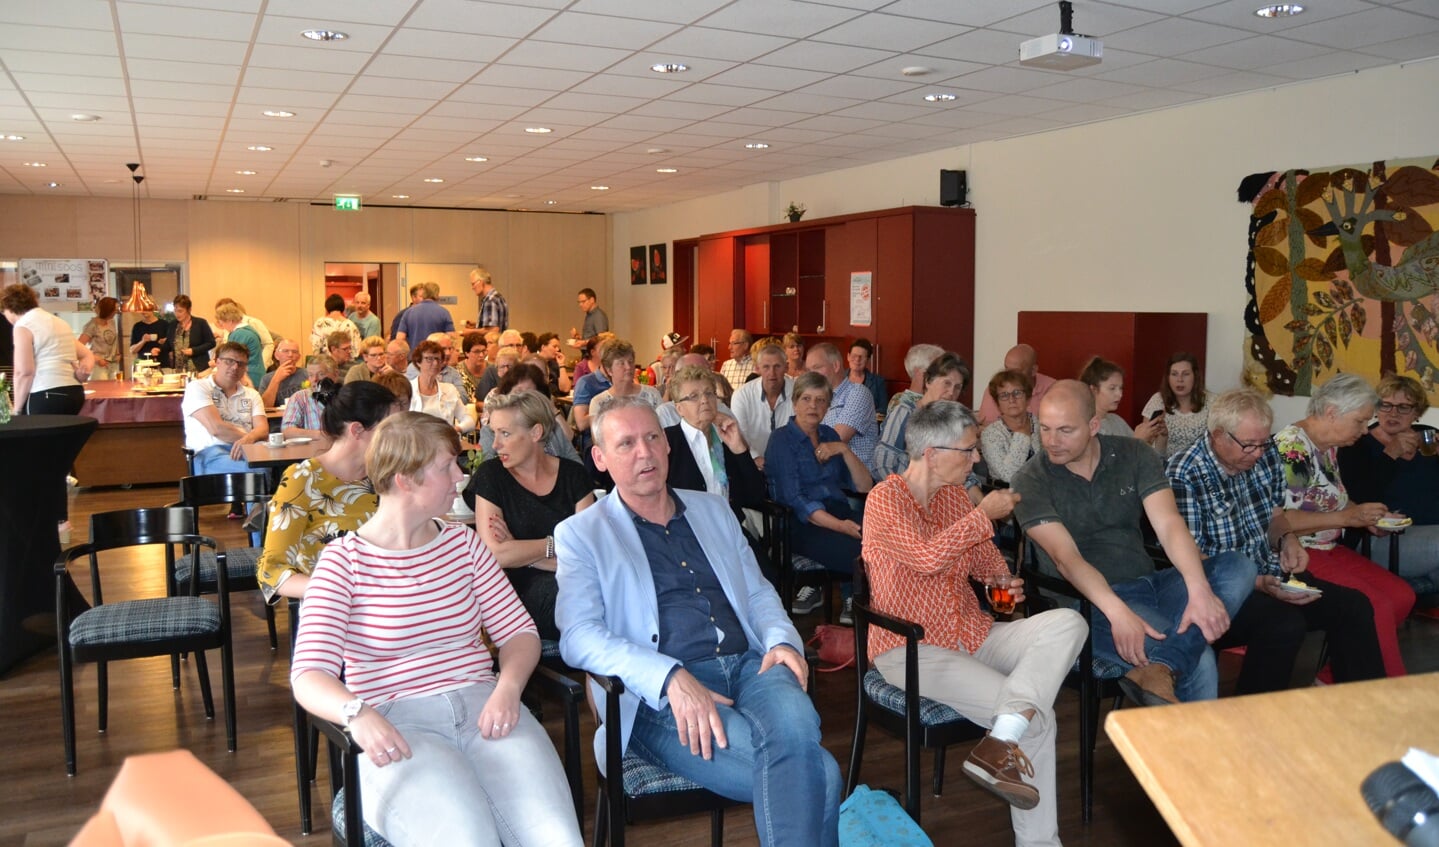 Volle zaal in dorpshuis 't Kempken bij opening WMO Harreveld. Foto: Karin Stronks